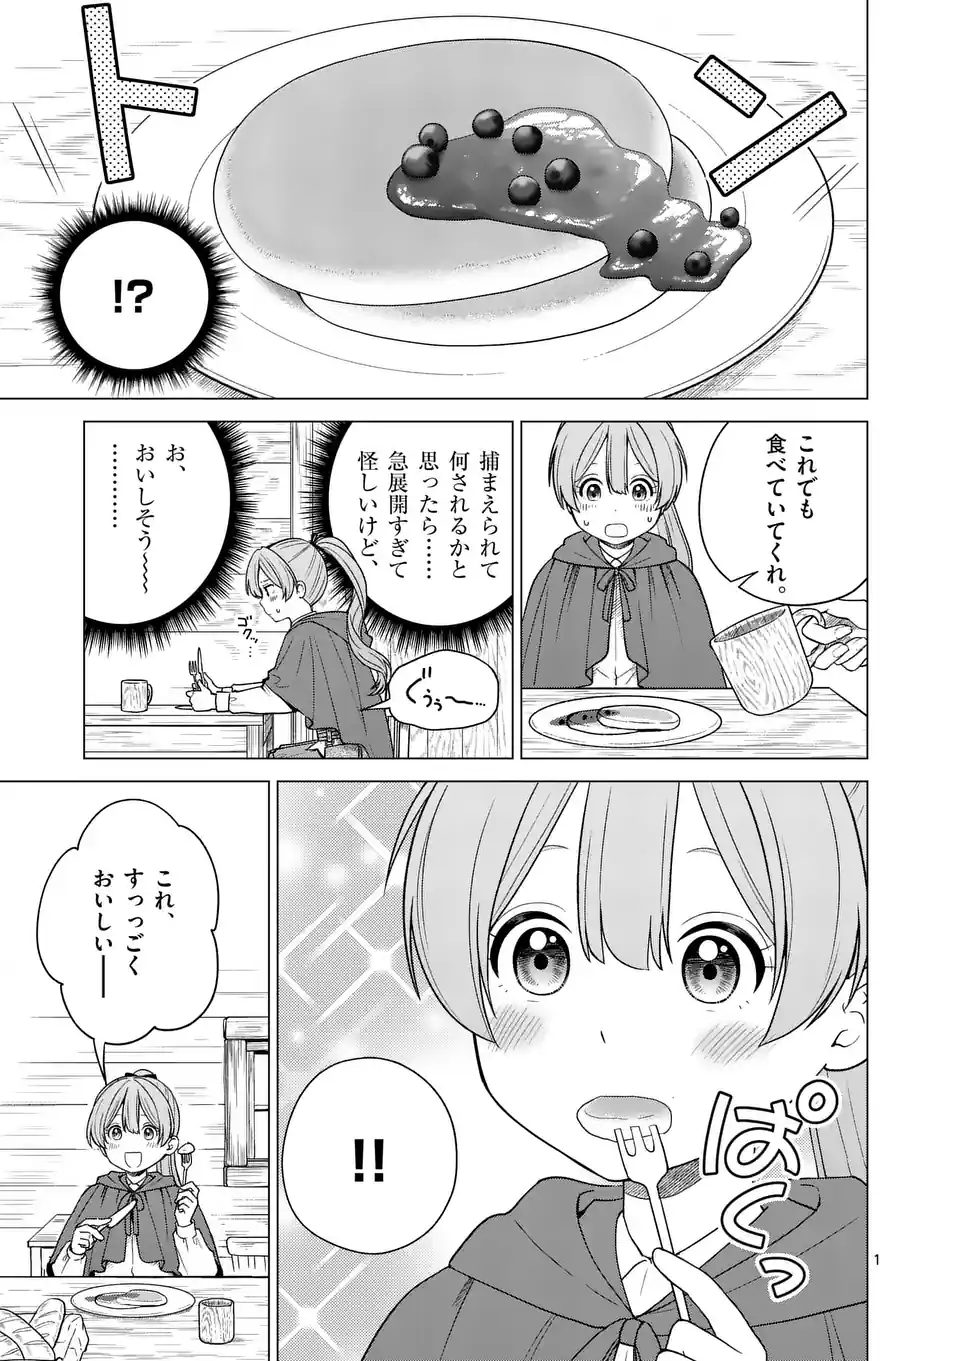 Isekai Pomeranian to Niji no Mofumofu Tabi - Chapter 2 - Page 1